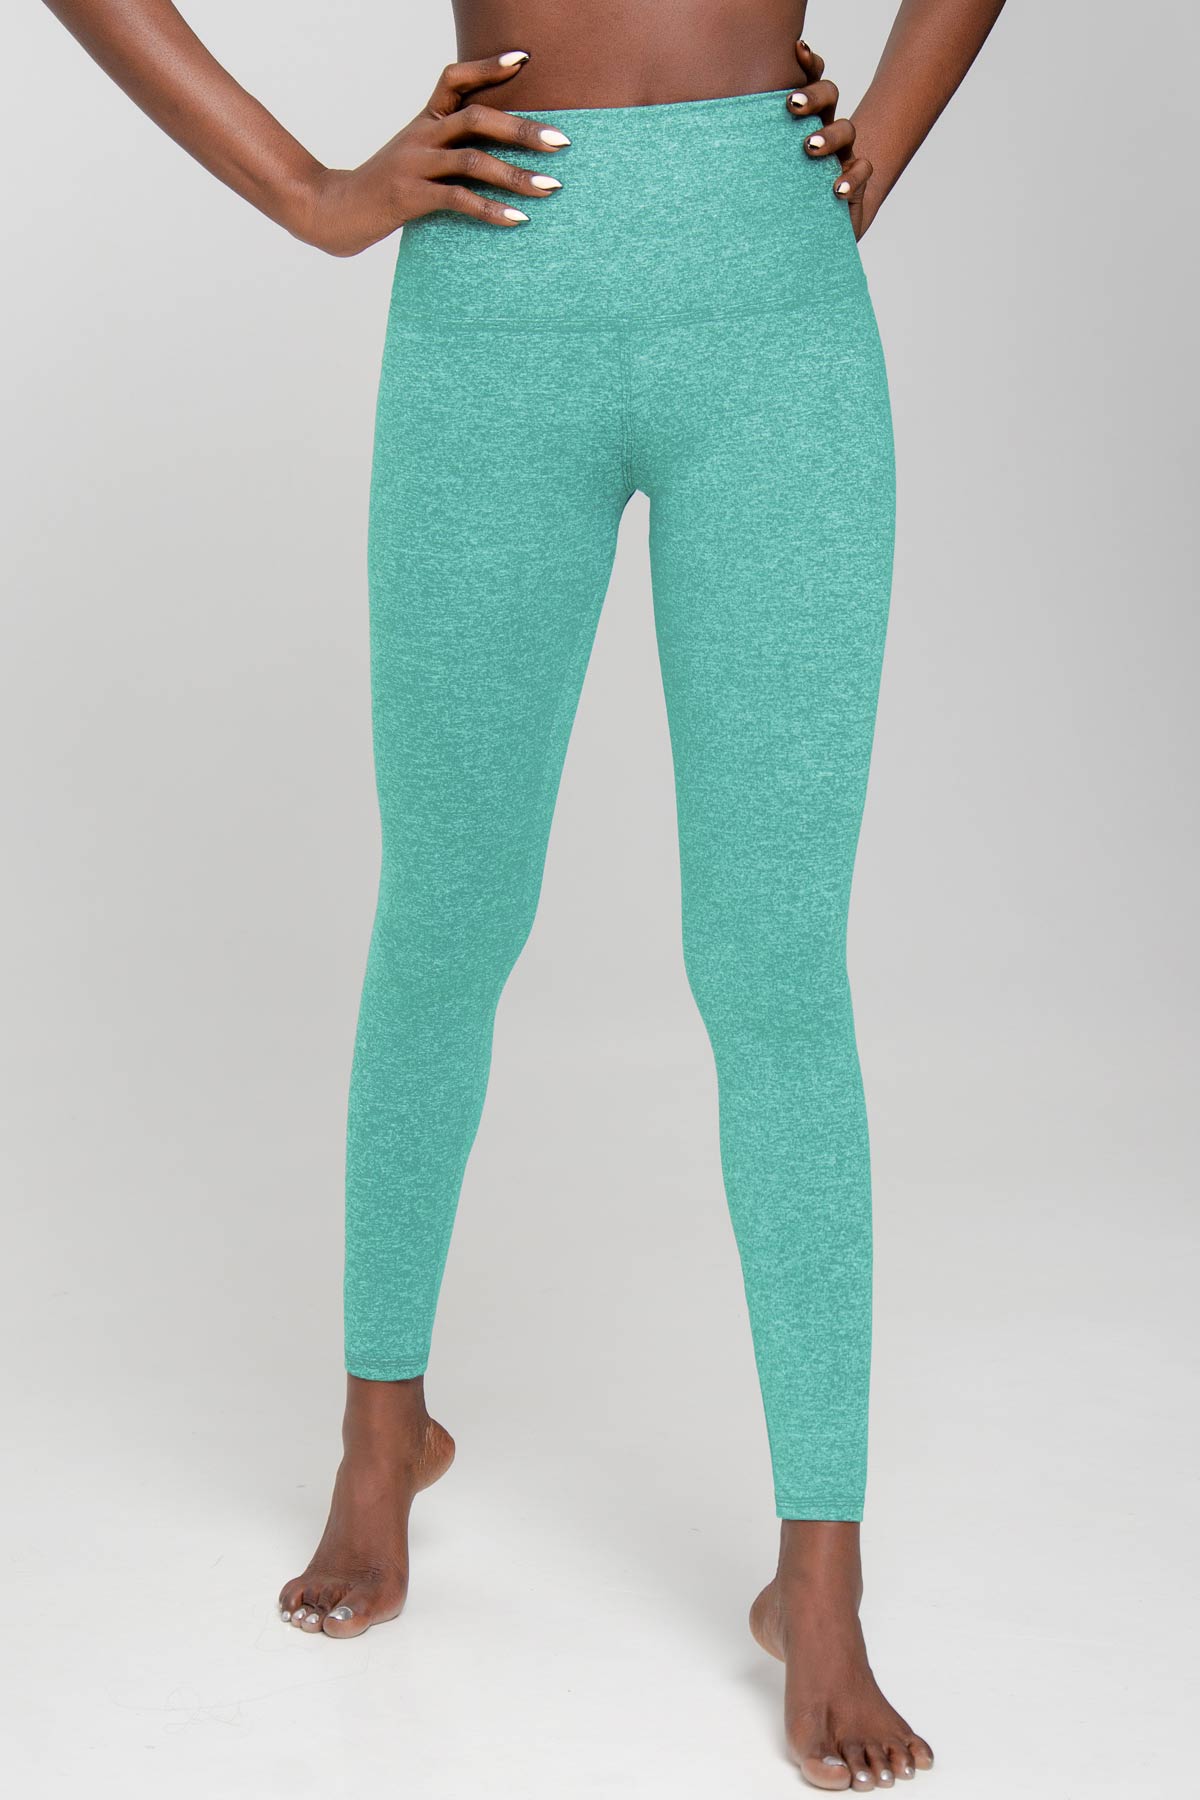 Heather Mint Lucy Green UV 50+ Performance Leggings Yoga Pants - Women - Pineapple Clothing